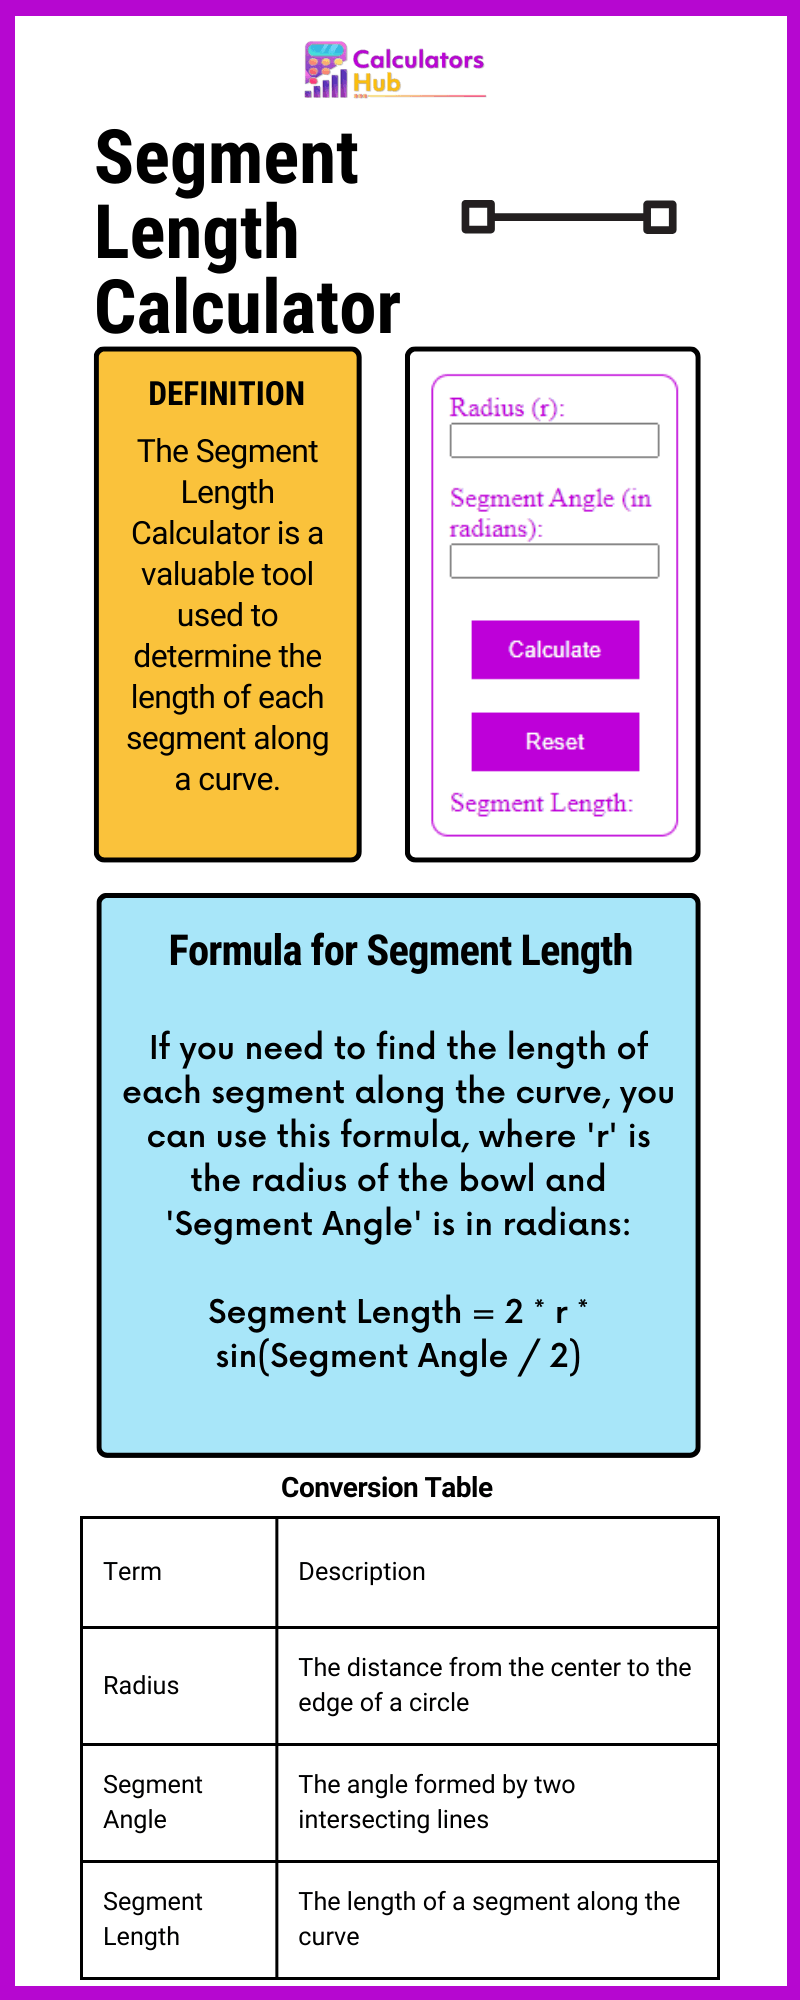 Segment Length Calculator